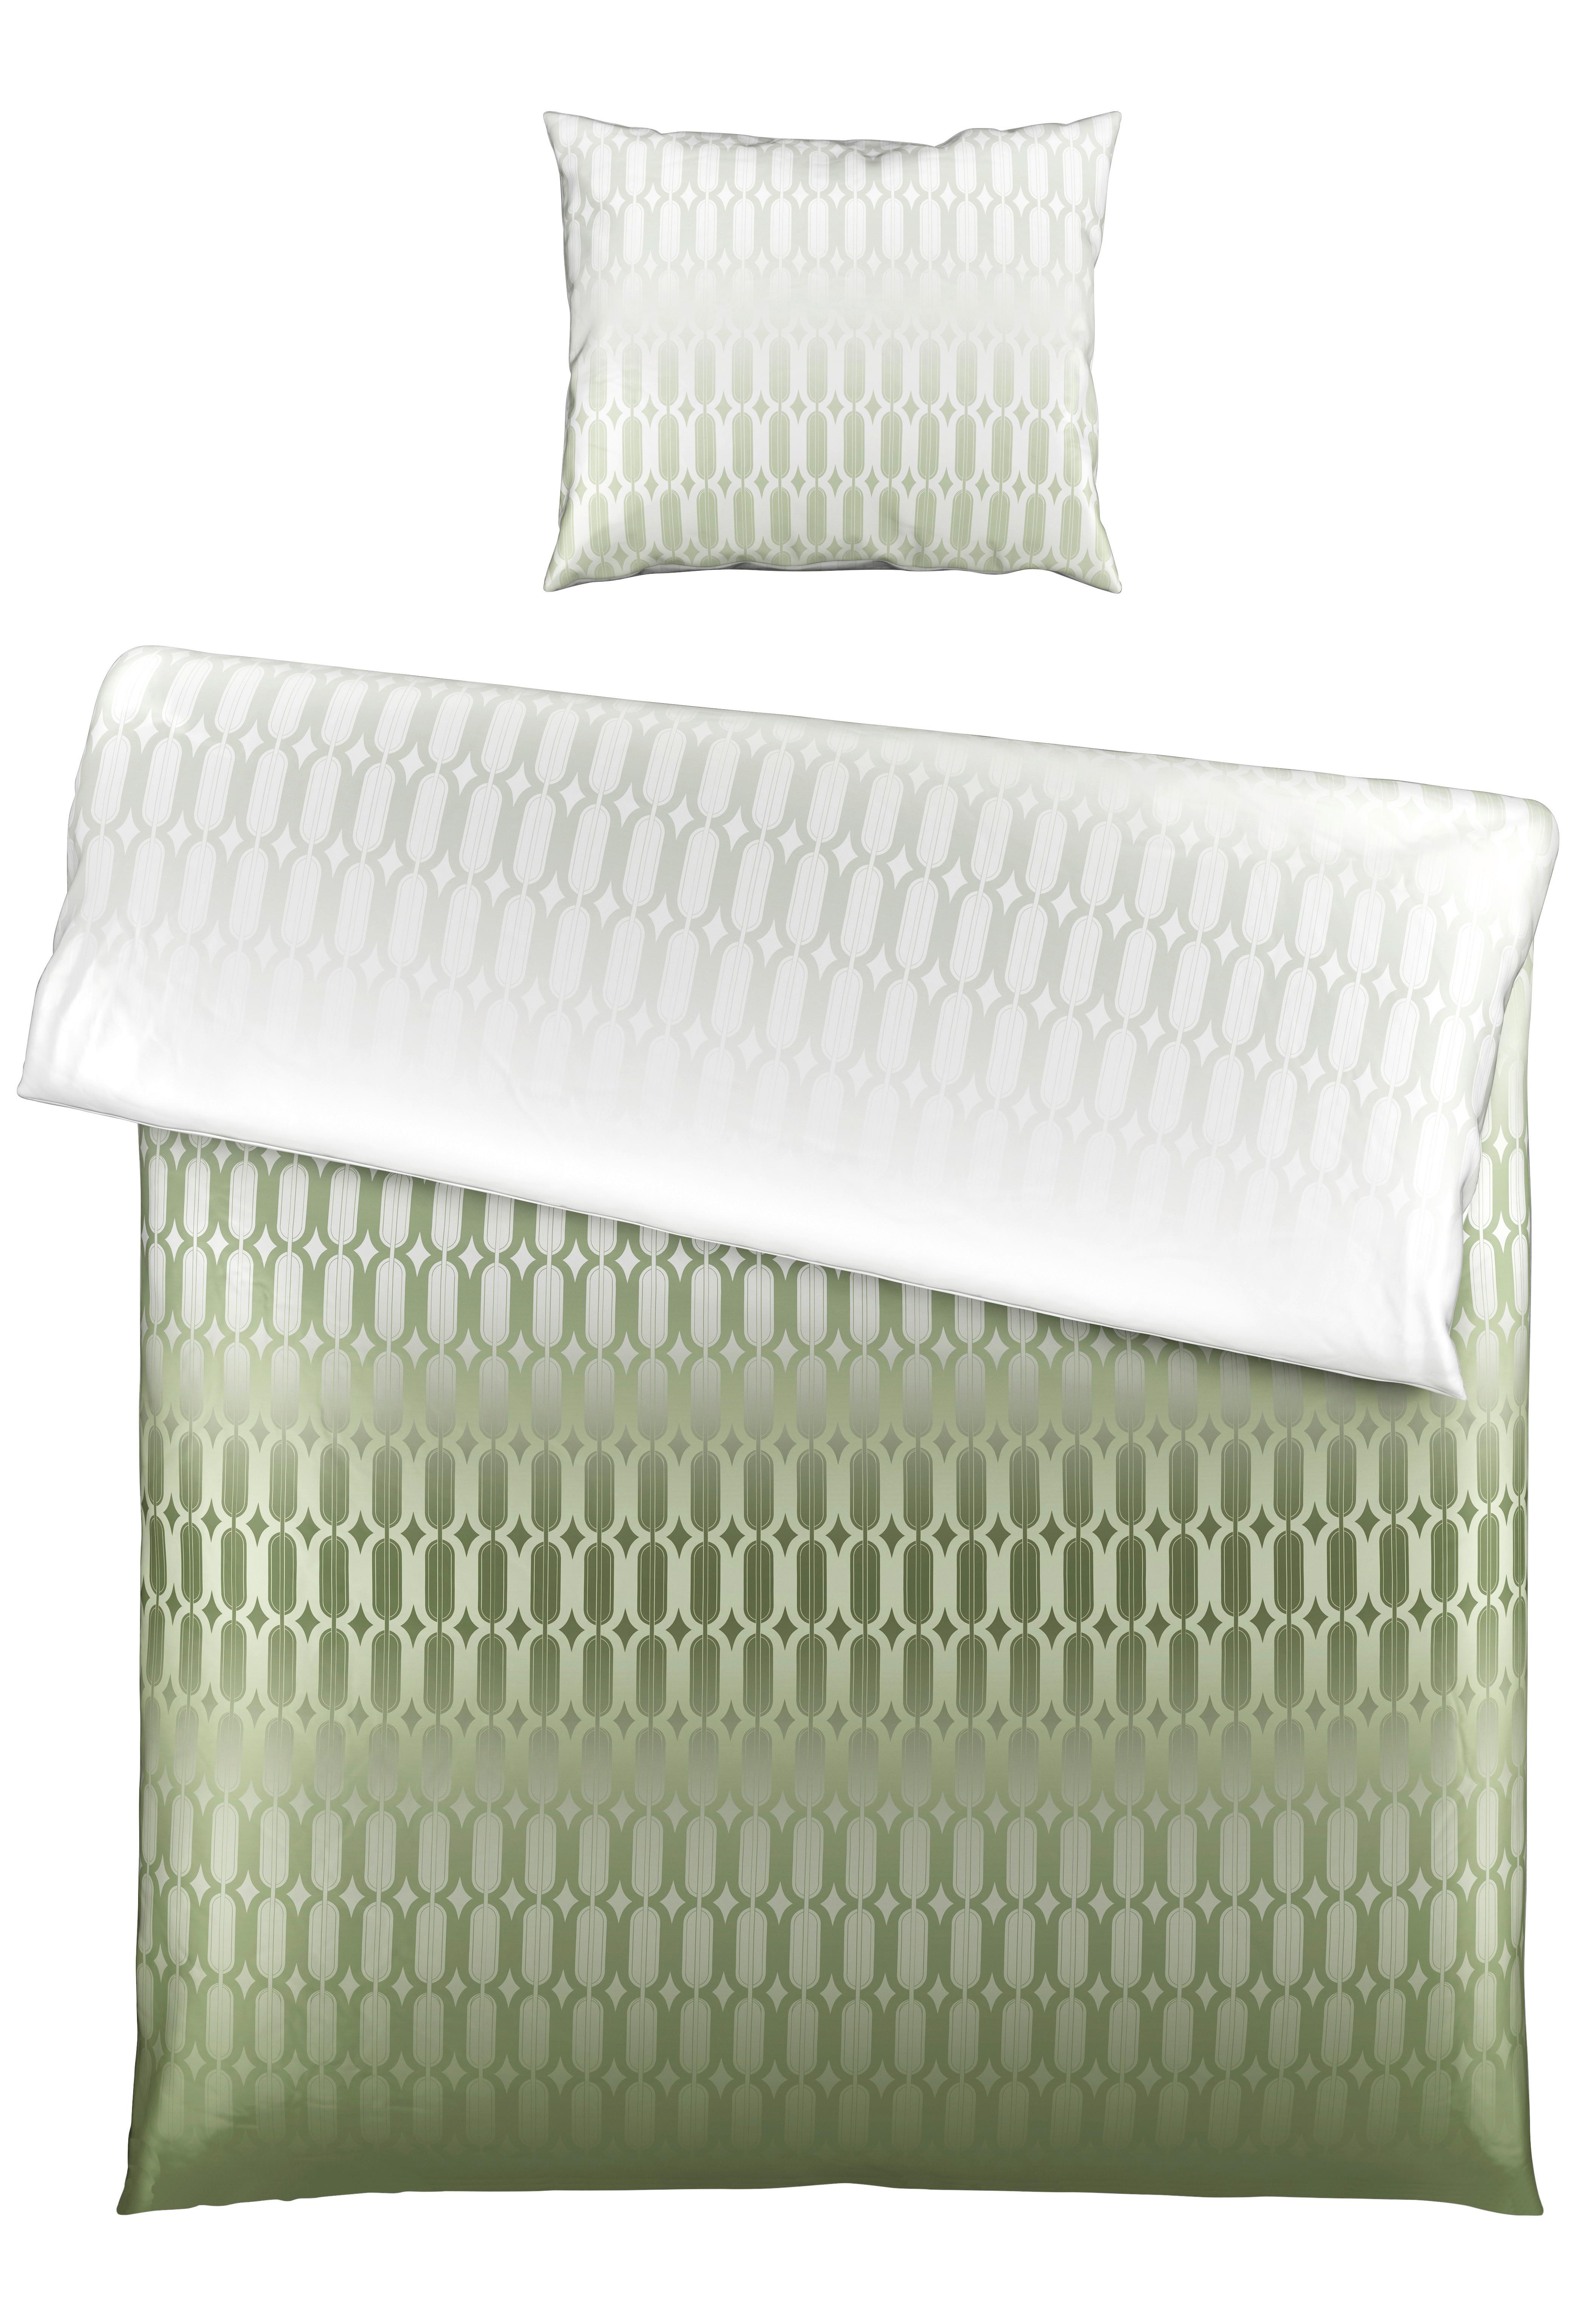 Bettwäsche Picol ca. 160x210cm - Olivgrün/Grün, Modern, Textil (160/210cm) - Premium Living